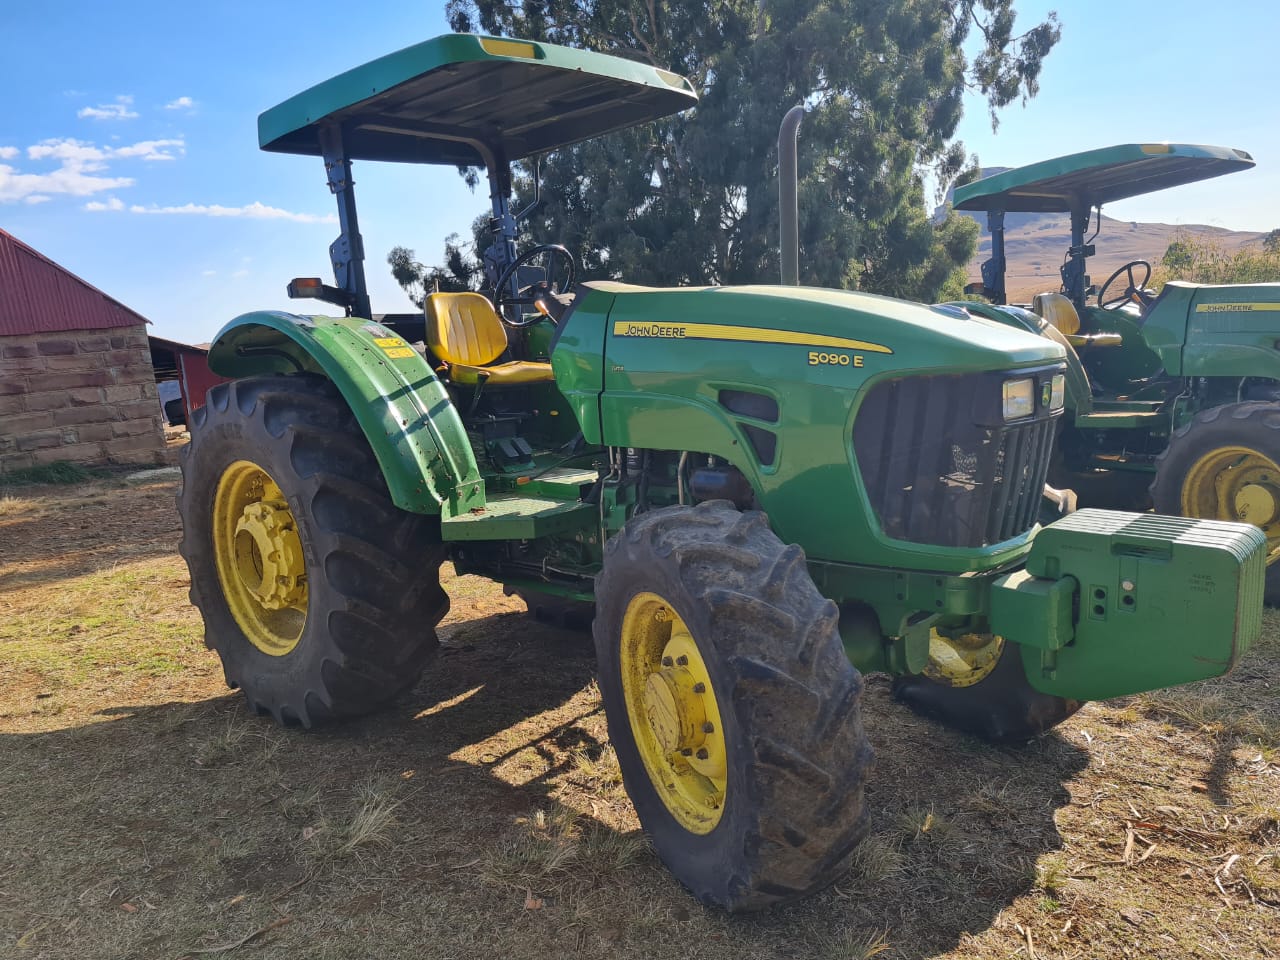 John Deere - 5090E Tractor - For Sale at AFGRI Equipment (Standerton)